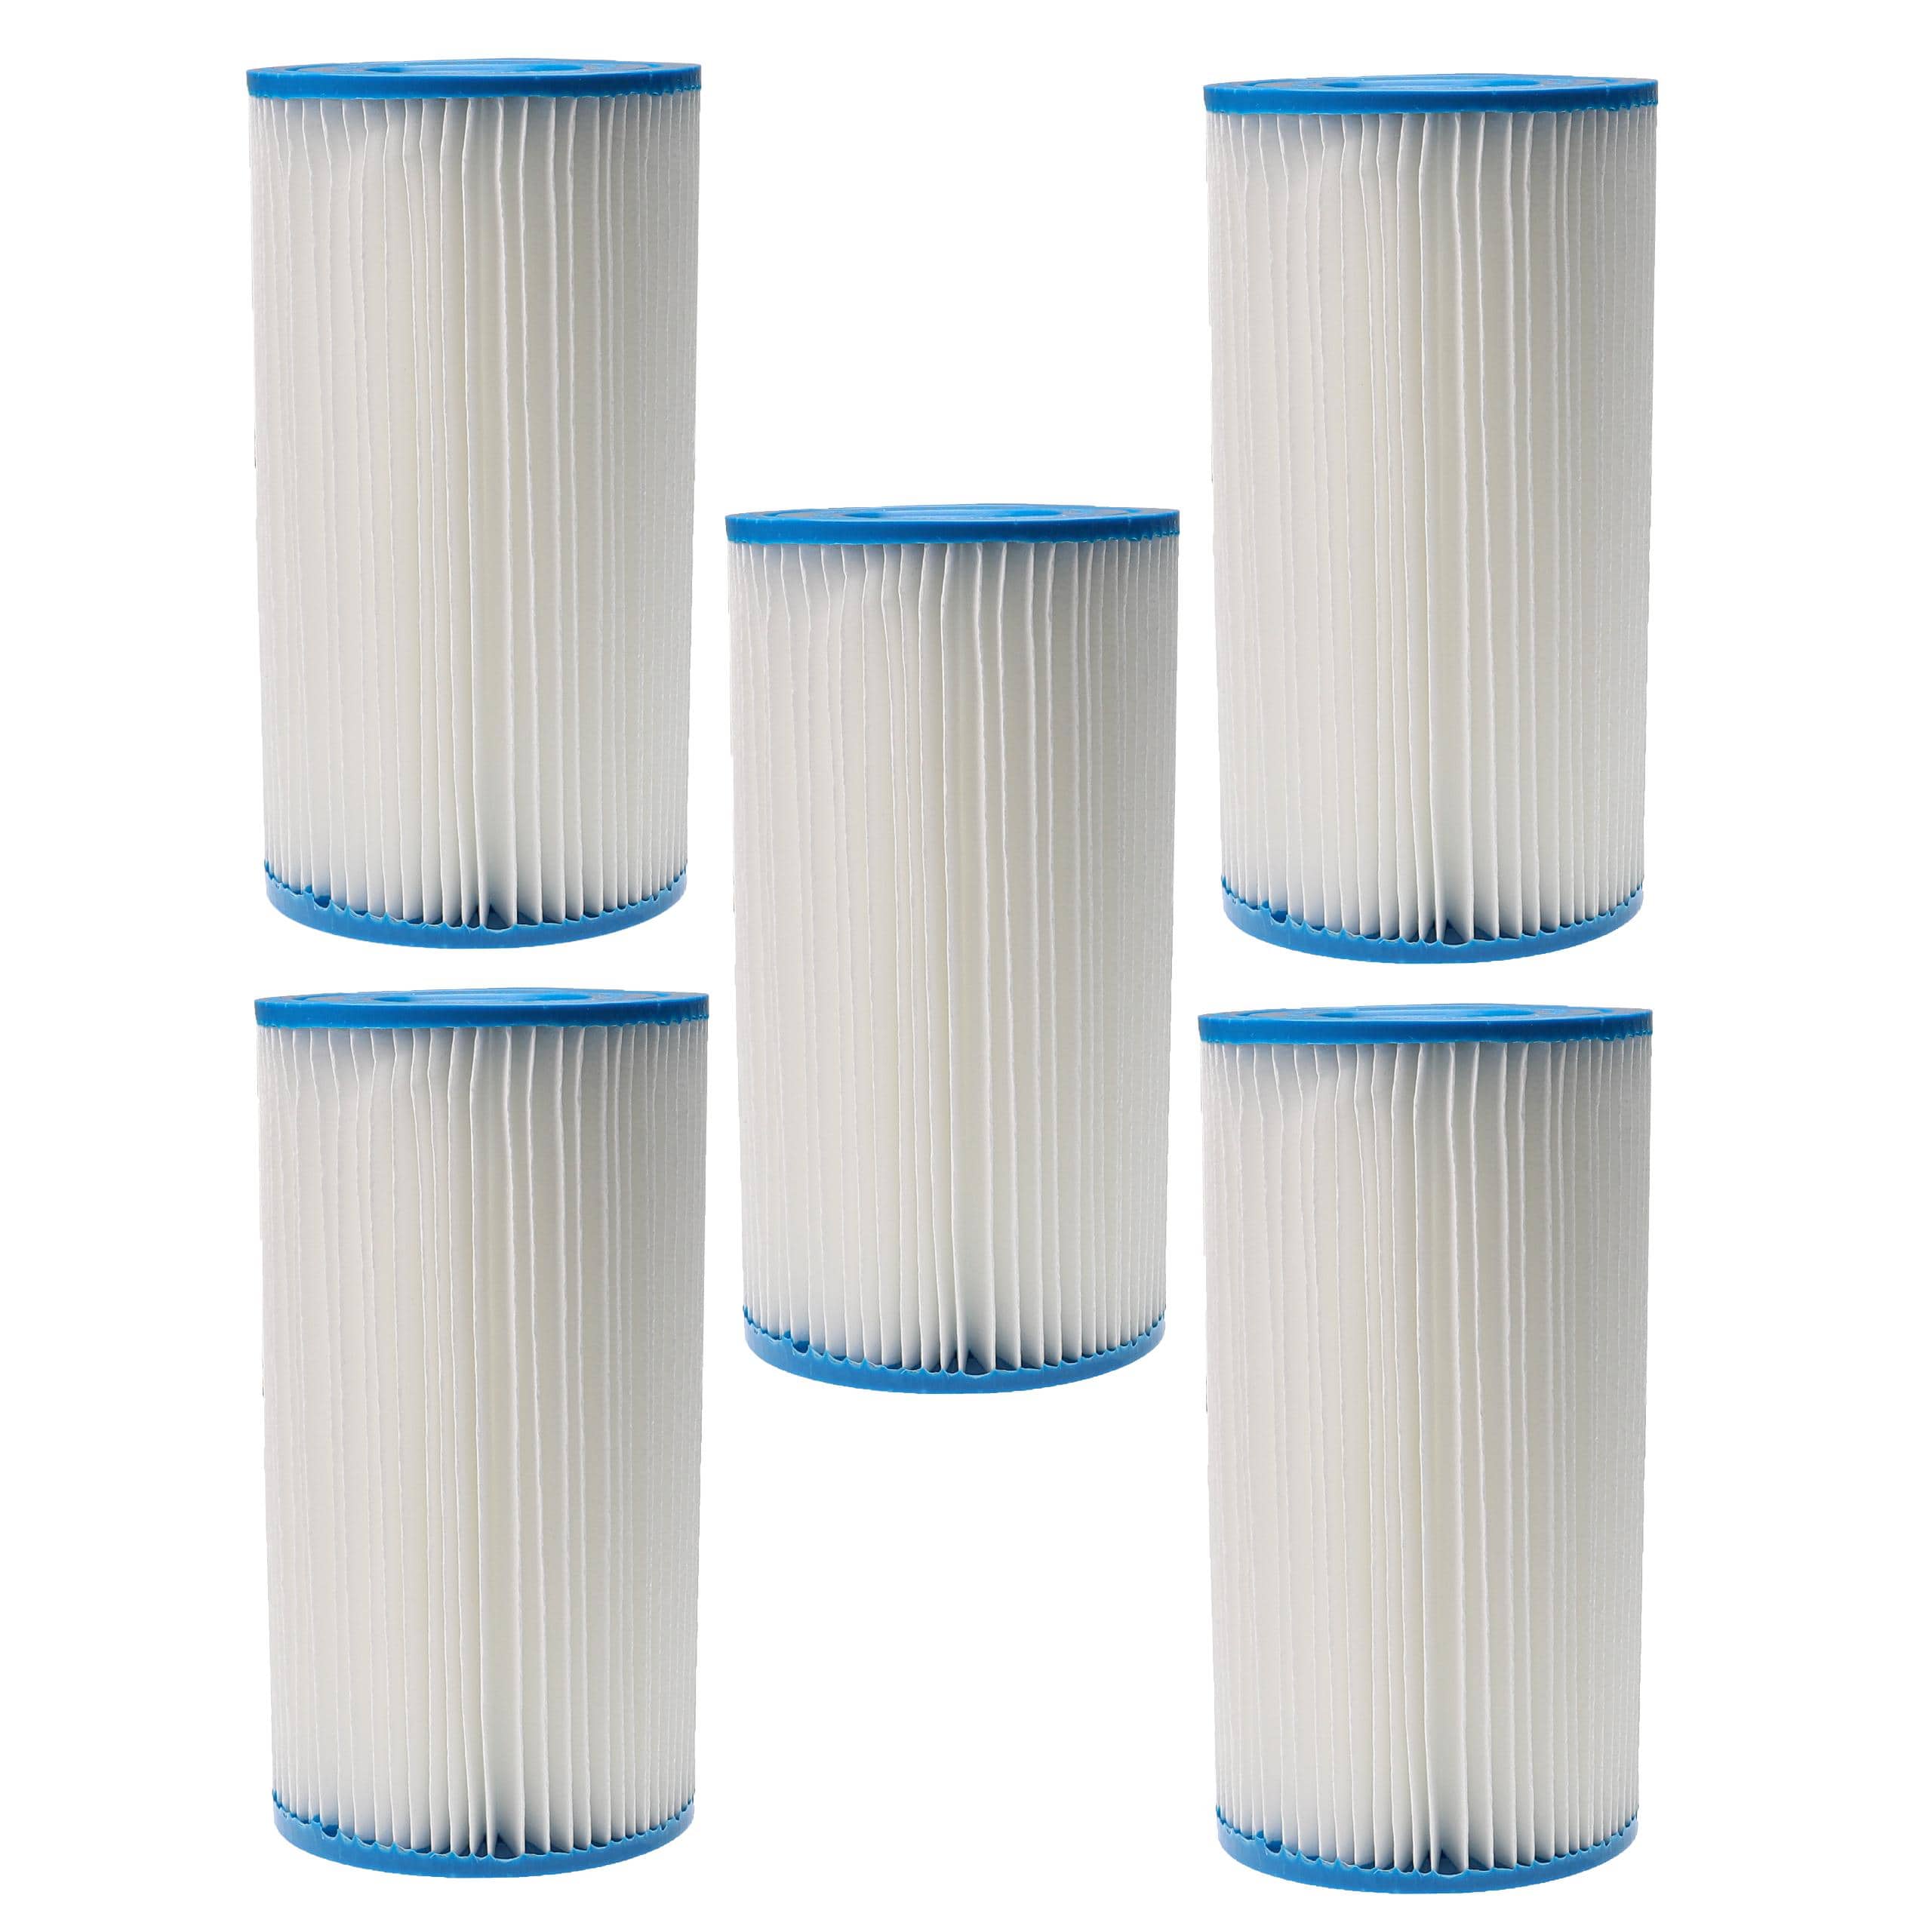 5x Wasserfilter als Ersatz für Intex Filter Typ A für Intex Swimmingpool & Filterpumpe - Filterkartusche